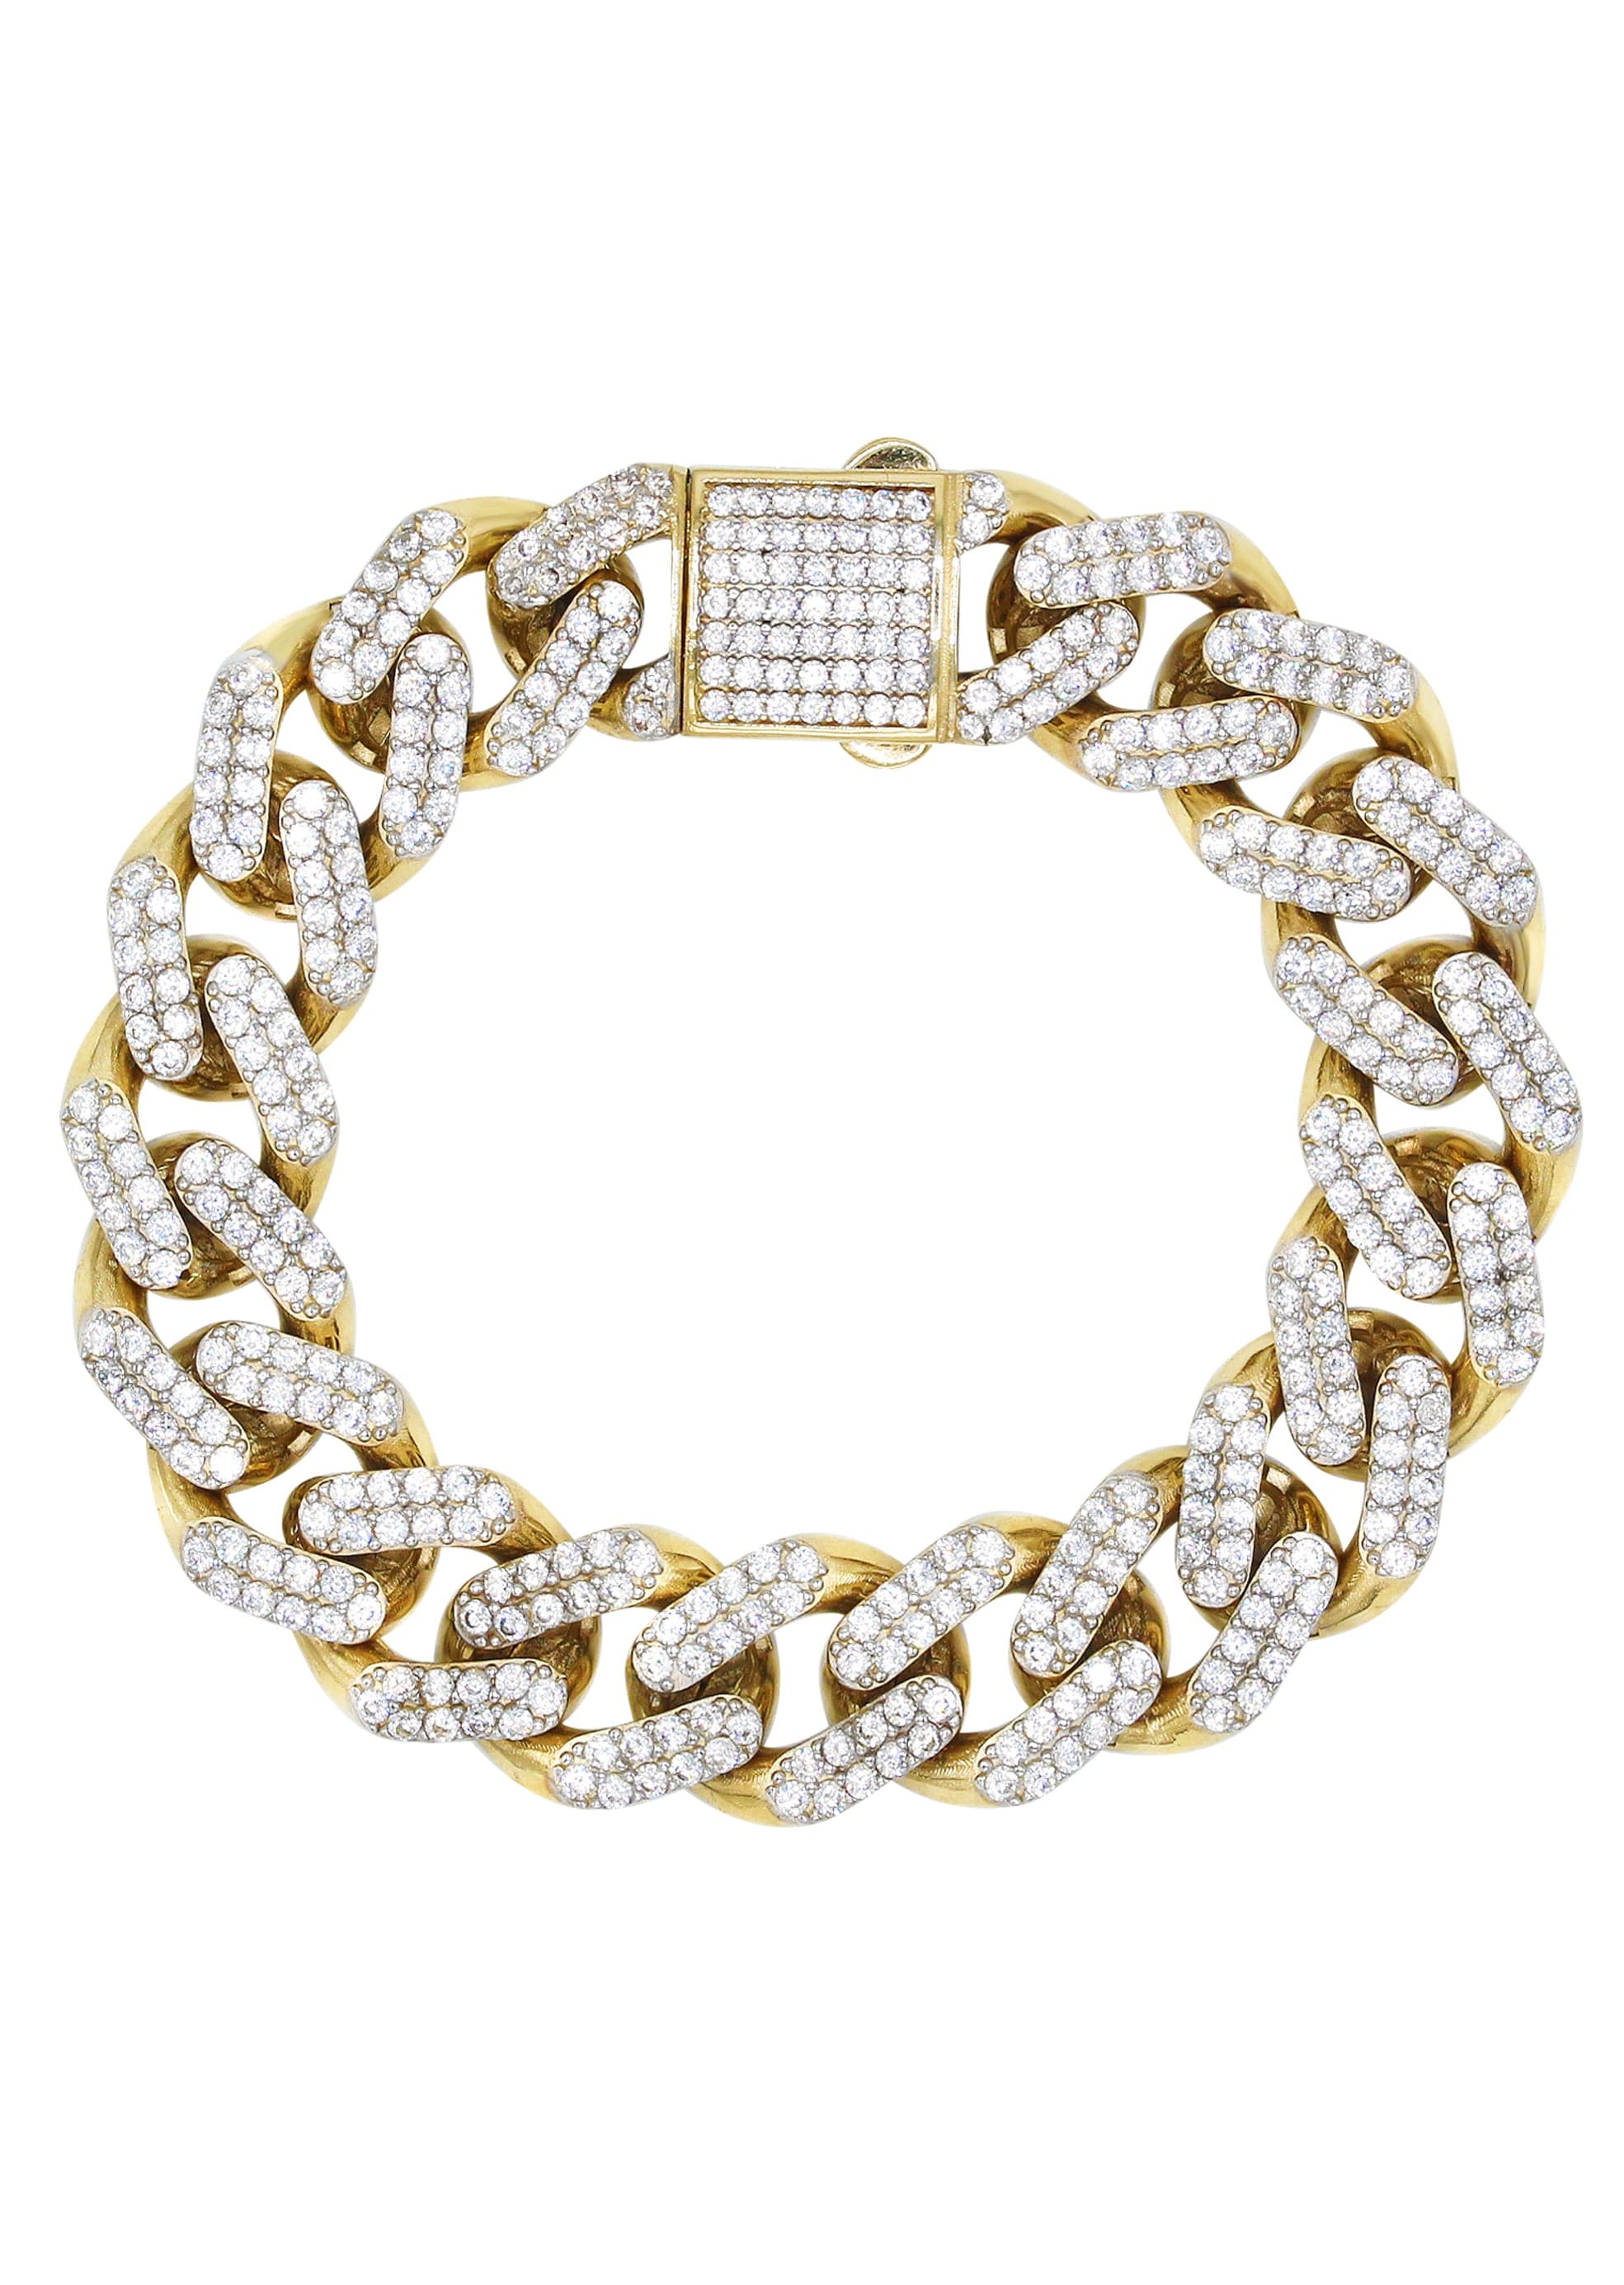 Diamond Cuban Link Bracelet at 339500.00 INR in Surat | Clio Diamond